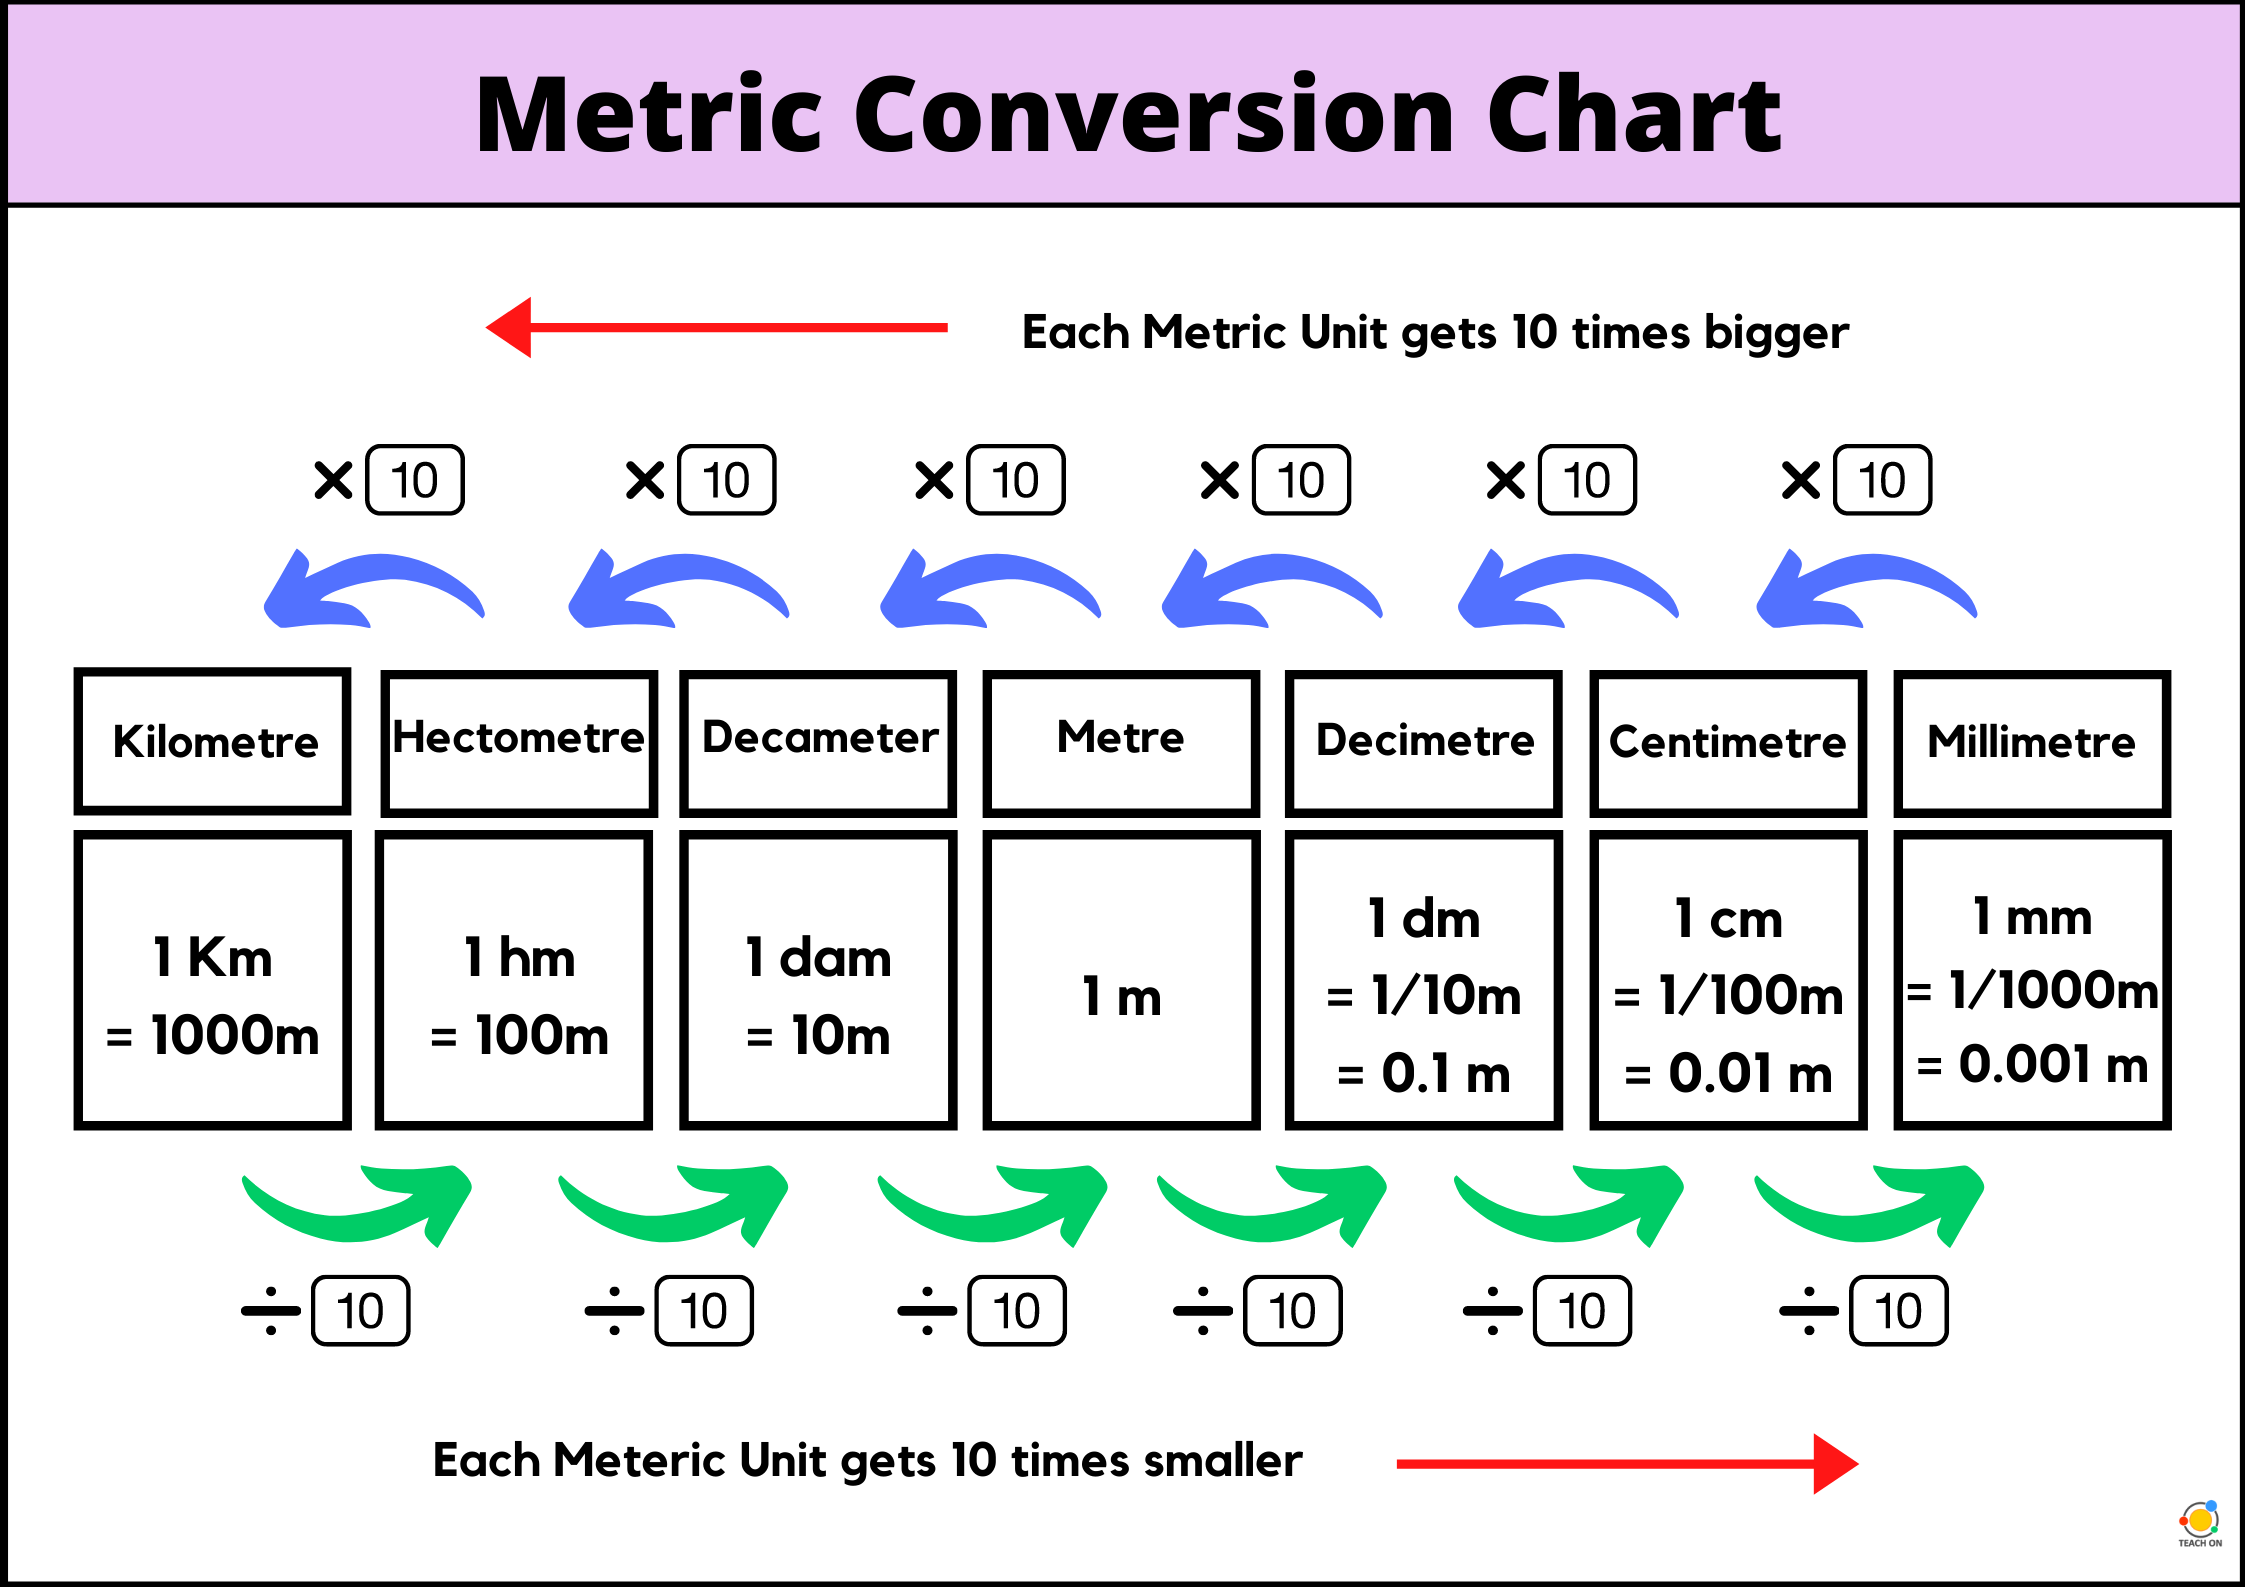 birkenstock-conversion-chart-sale-save-57-jlcatj-gob-mx